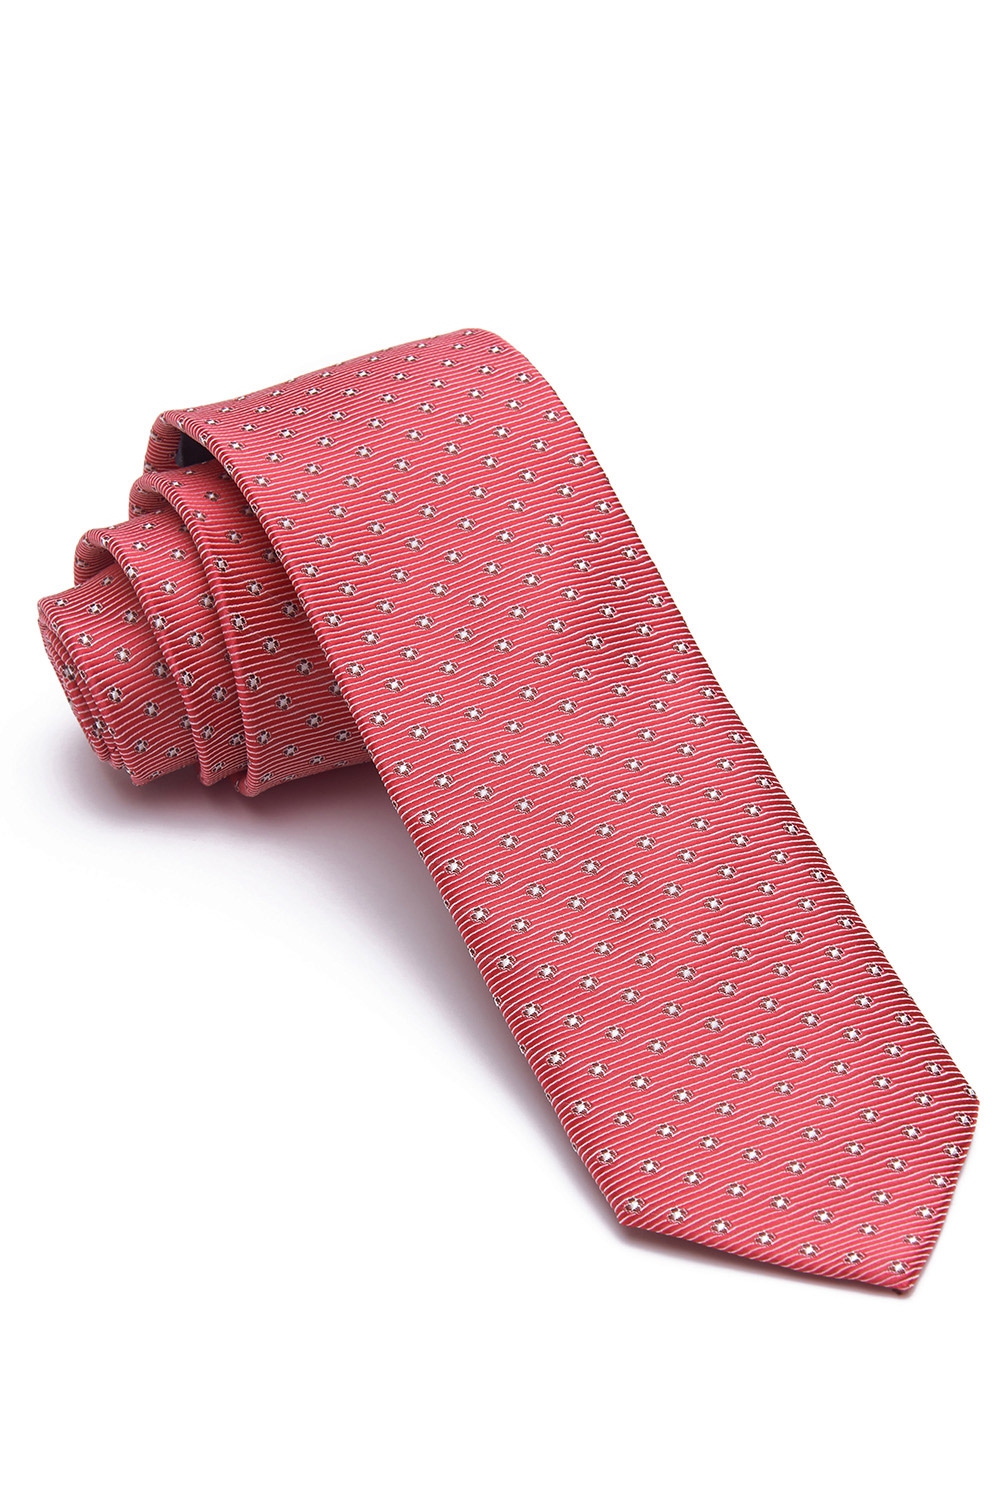 Cravata poliester roz print geometric 0